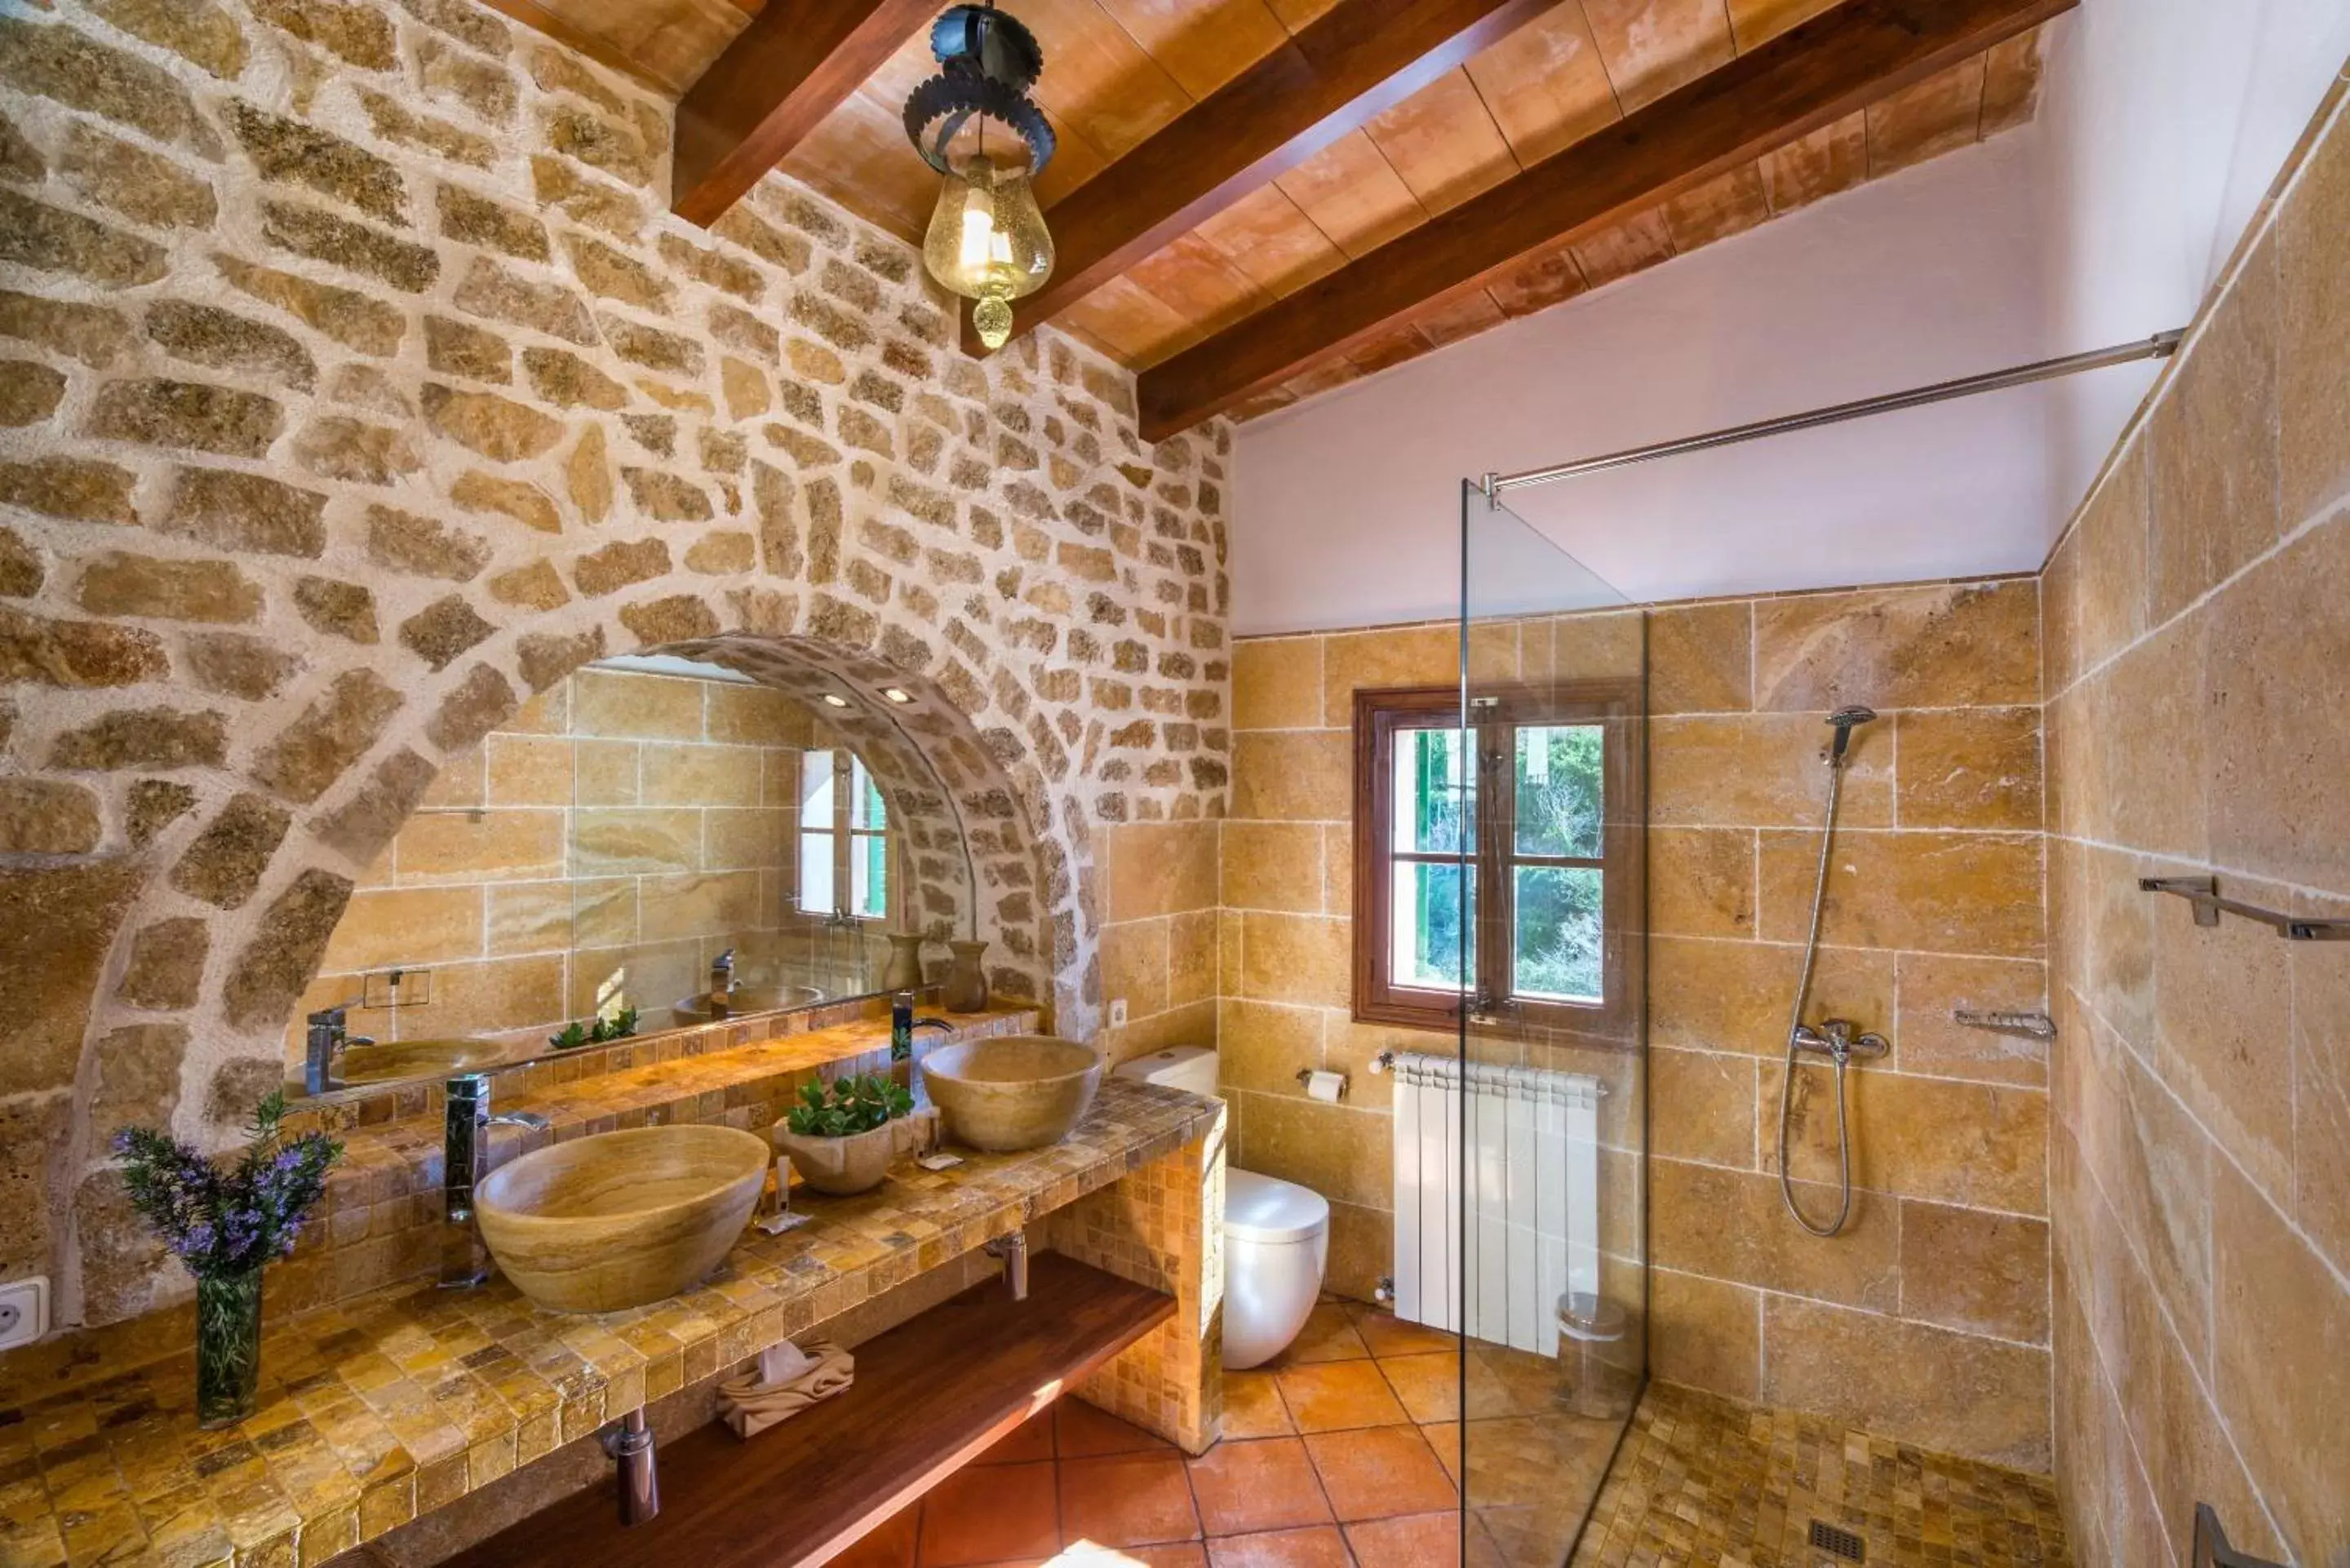 Bathroom in Hotel Sa Vall